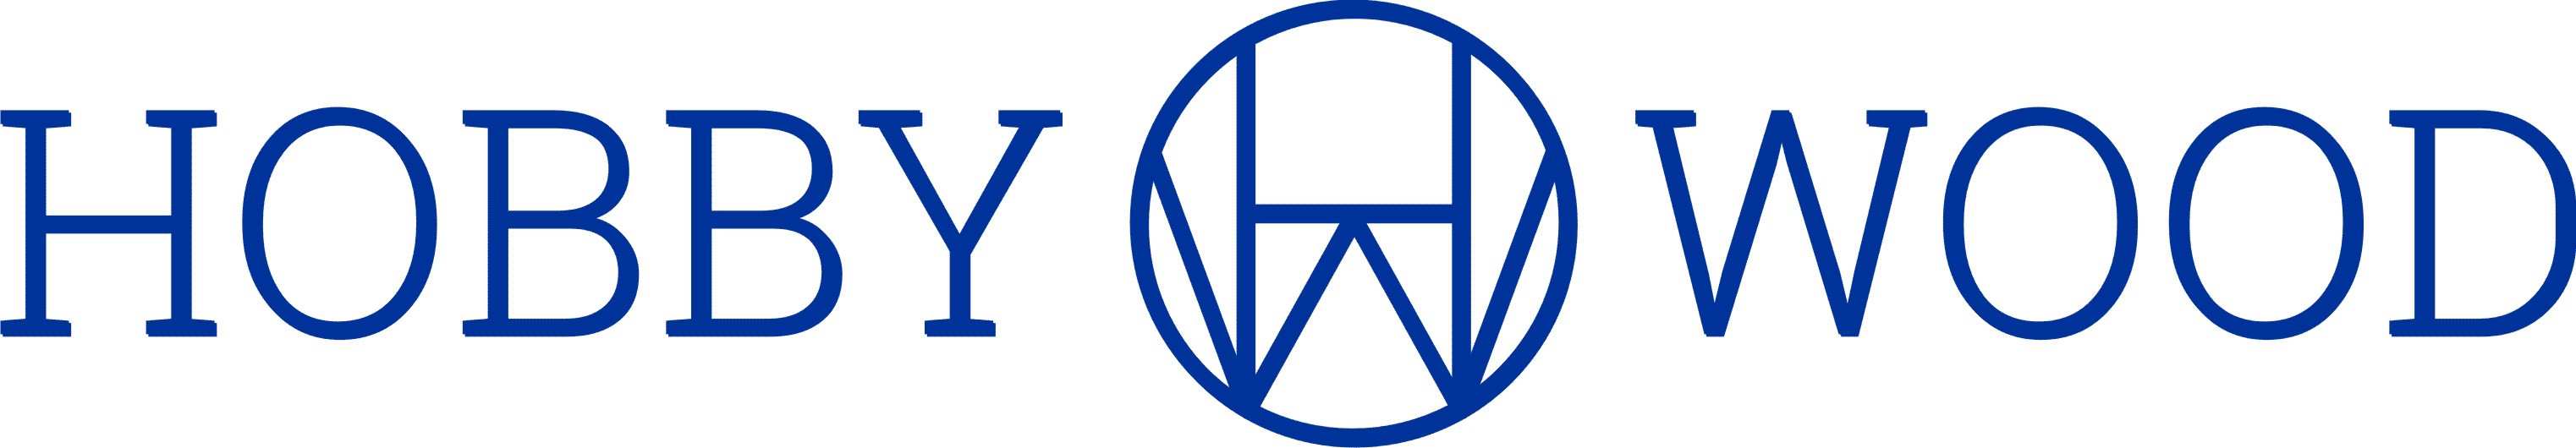 Hobbywood_logo.jpg
